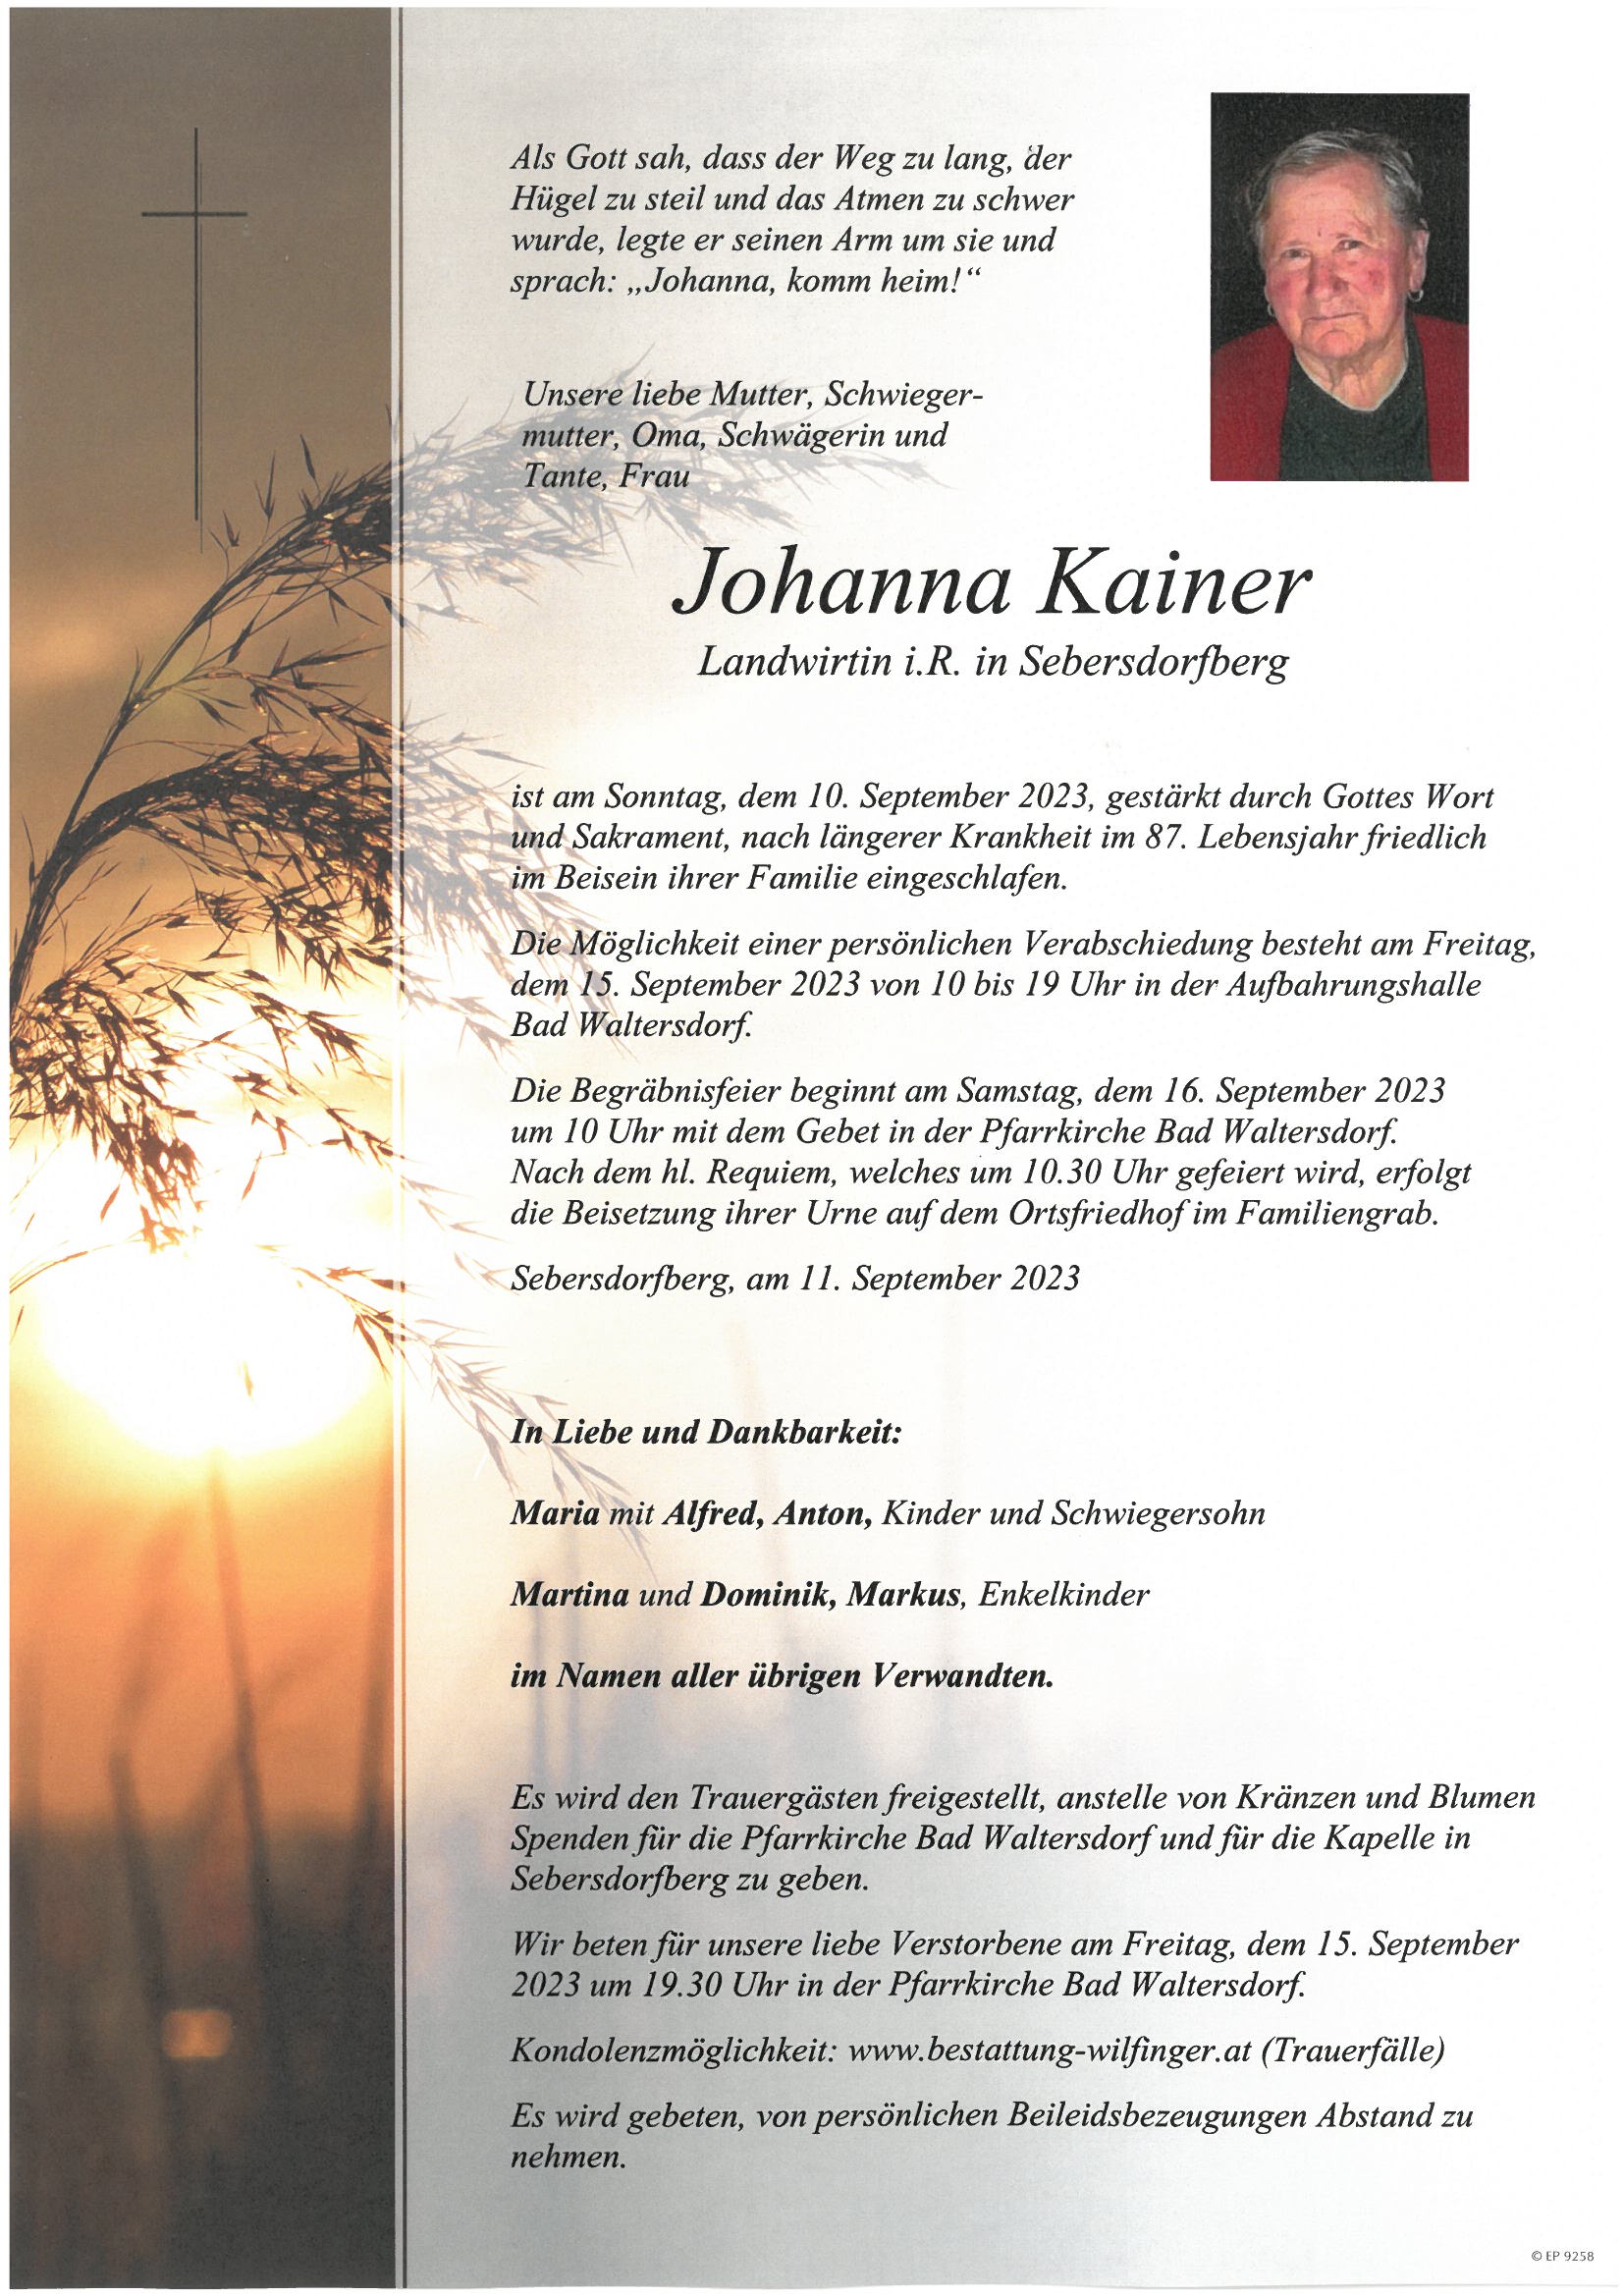 Johanna Kainer, Sebersdorfberg